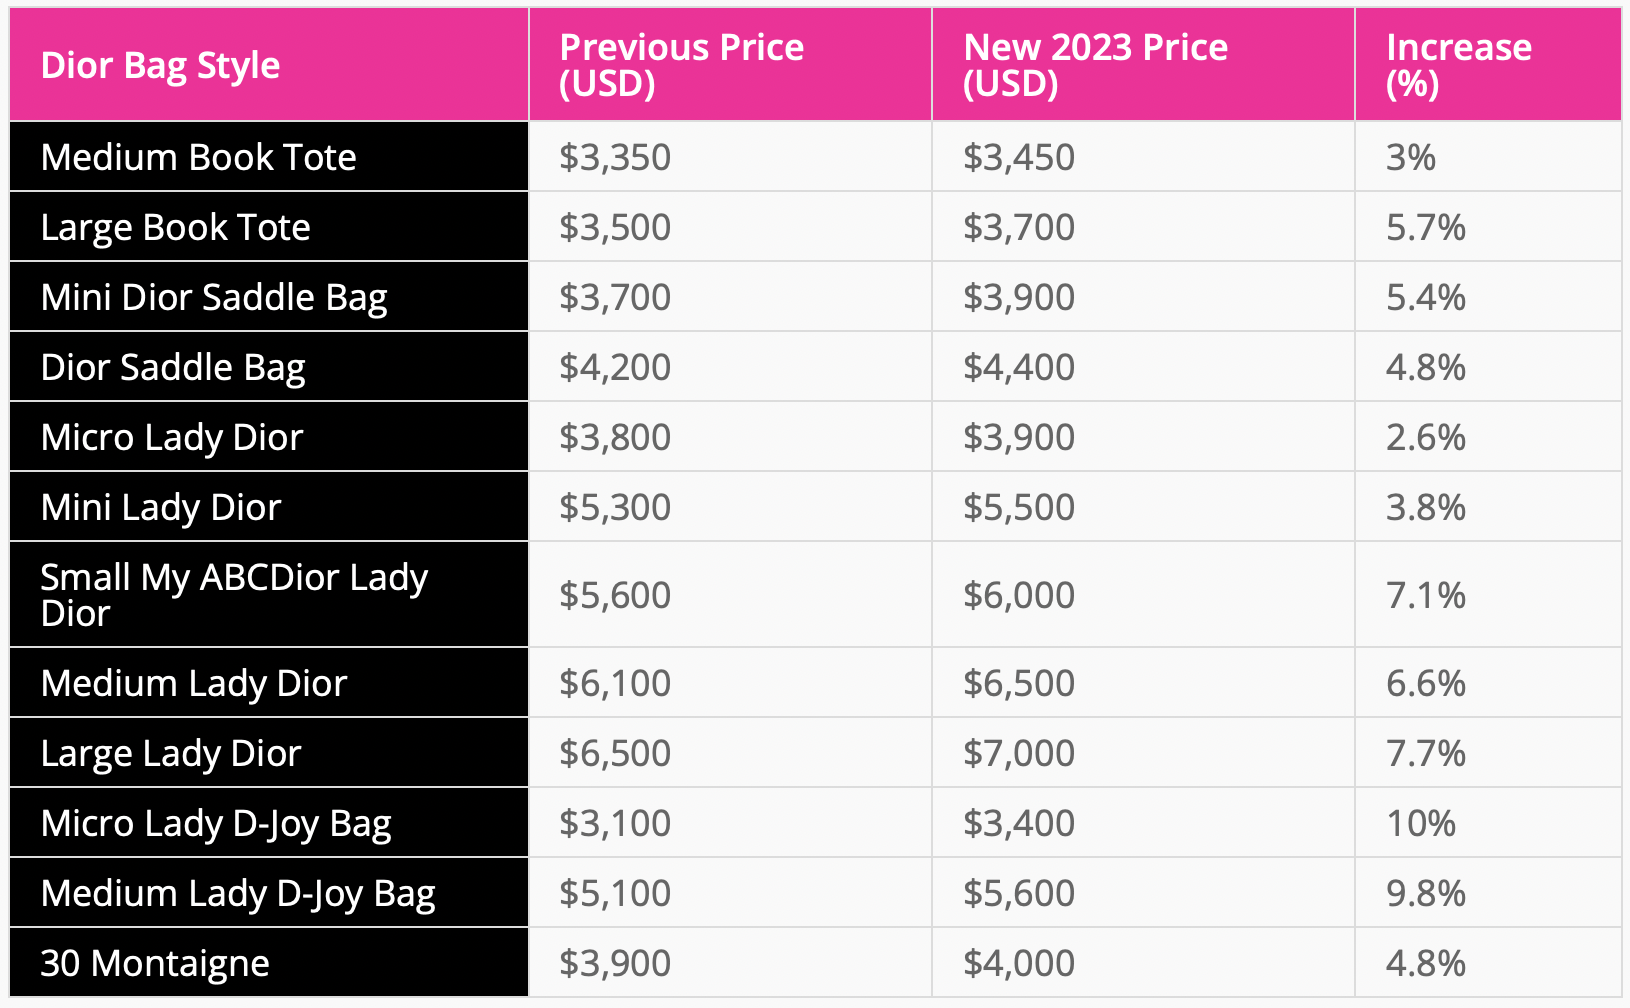 Dior's Global 2023 Price Hike is Here